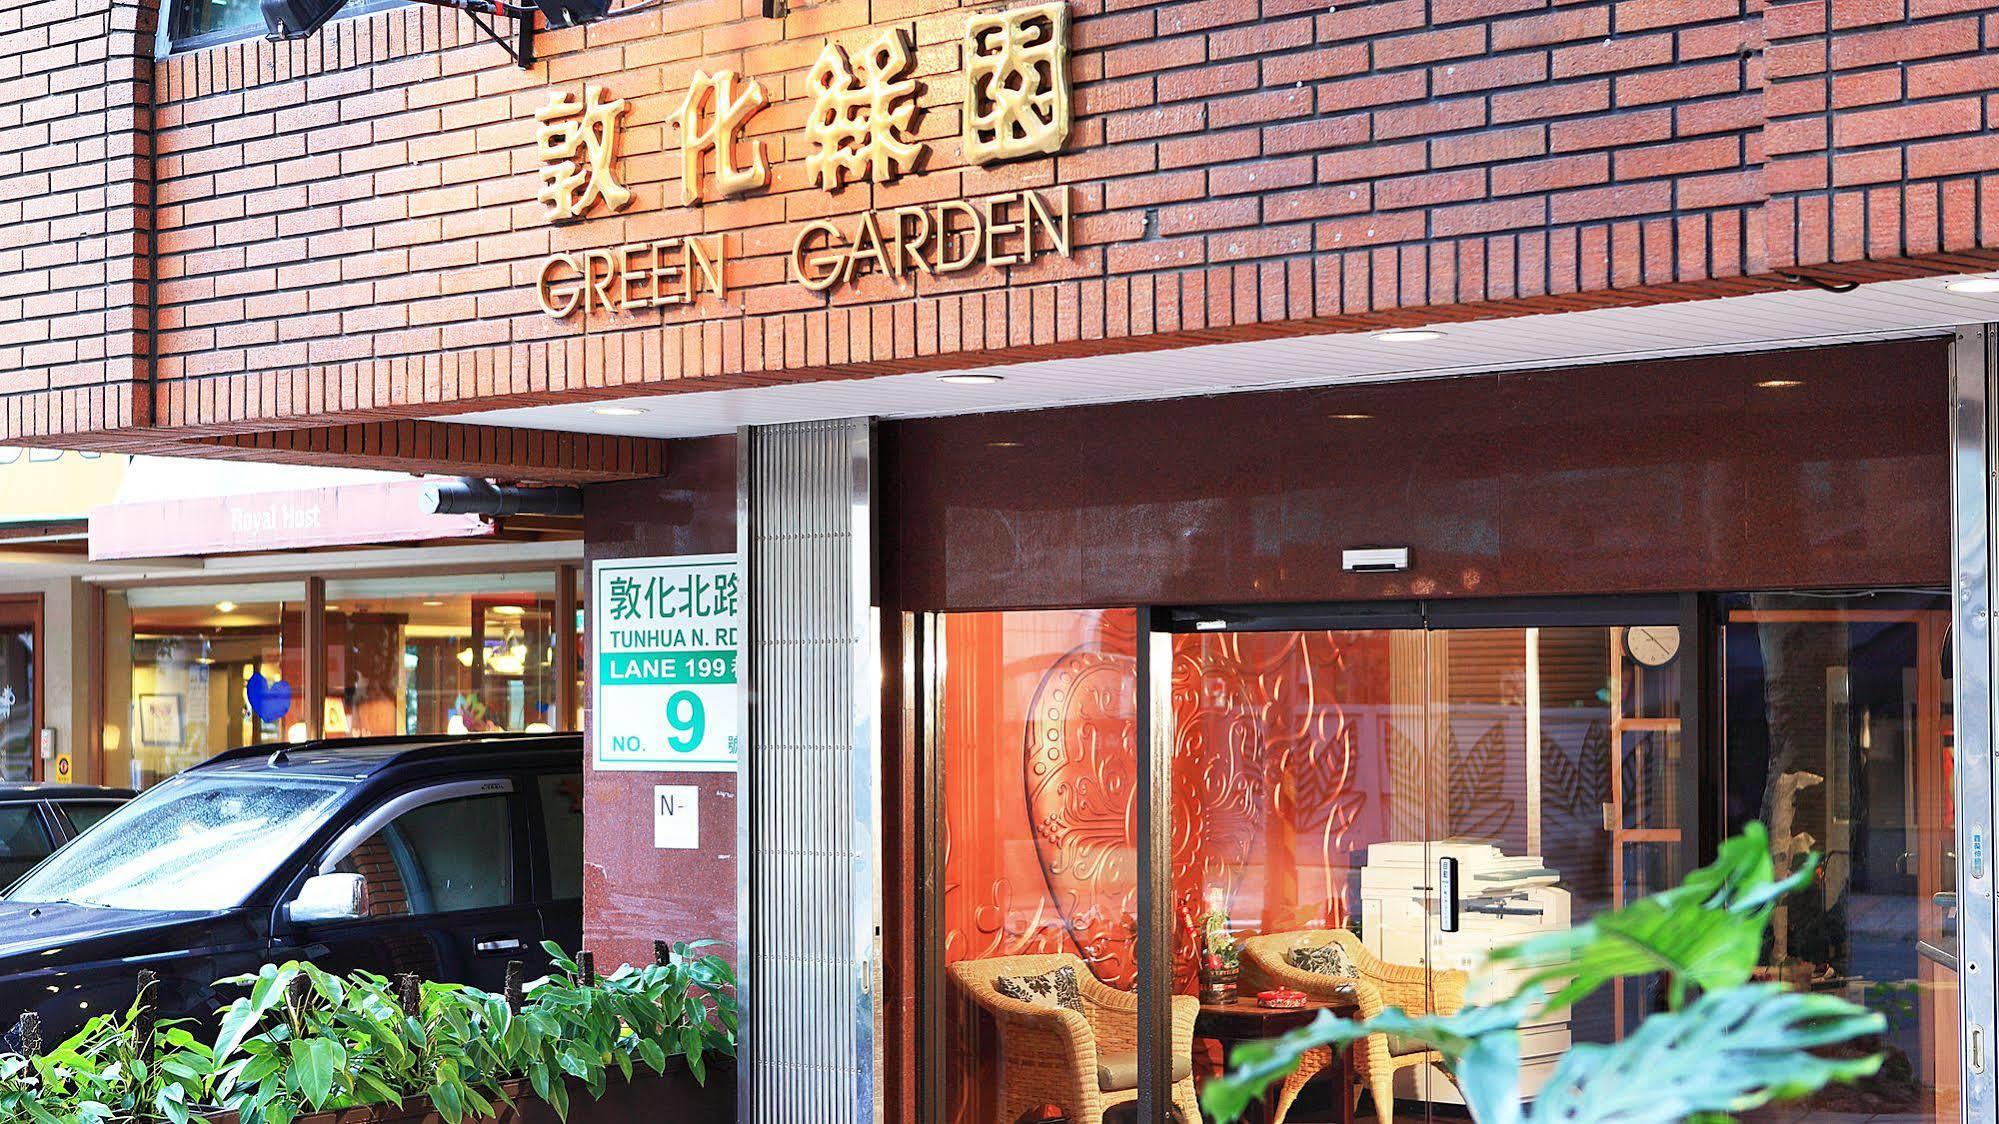 Green Garden Apartments 台北市 エクステリア 写真